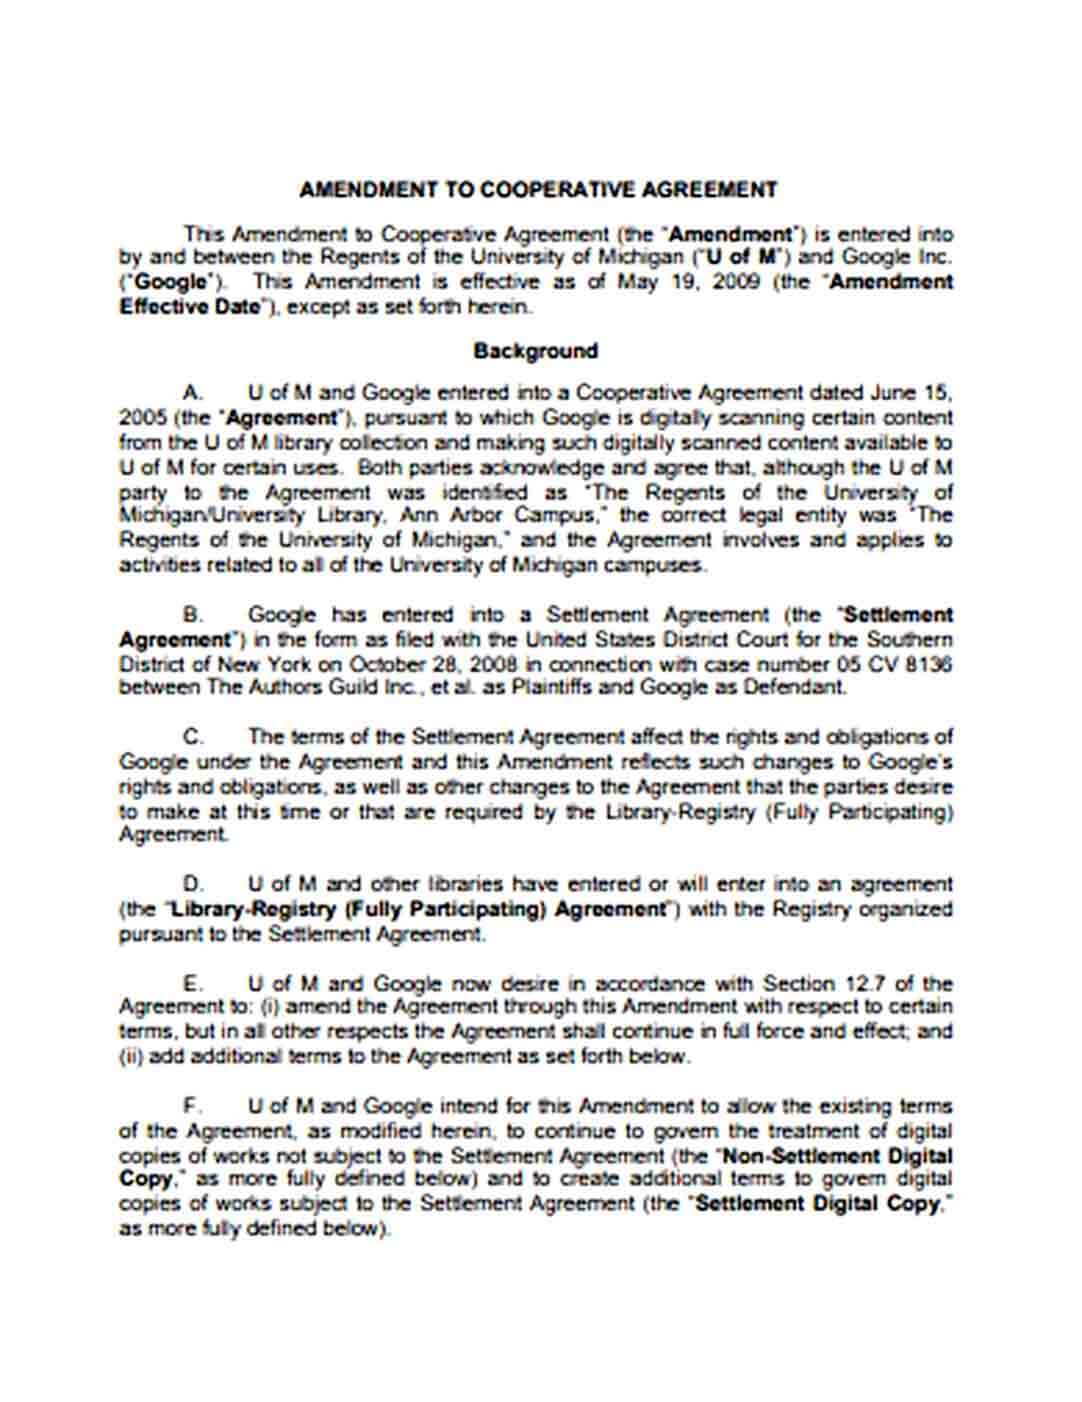 Sample Amendment to Cooperative Agreement